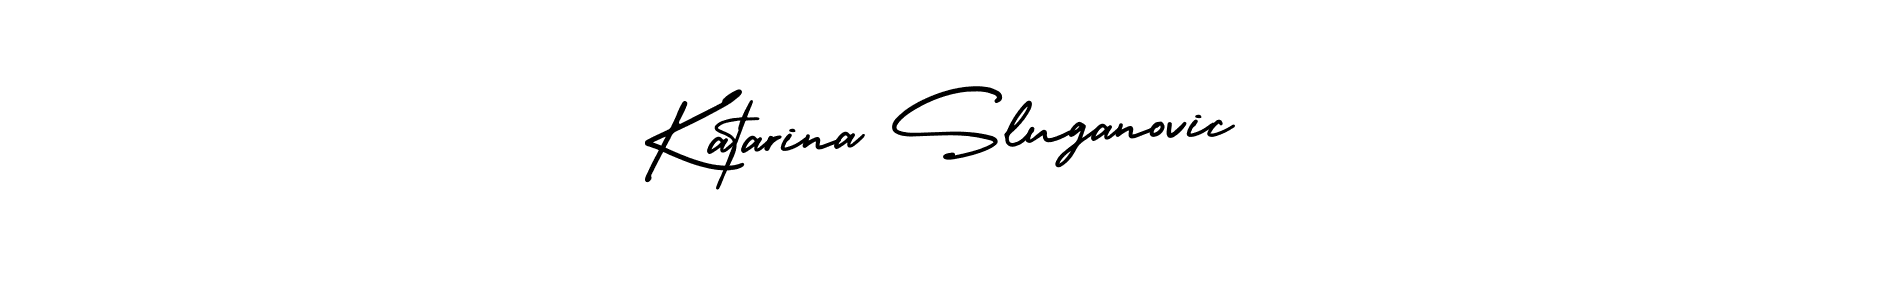 Best and Professional Signature Style for Katarina Sluganovic. AmerikaSignatureDemo-Regular Best Signature Style Collection. Katarina Sluganovic signature style 3 images and pictures png